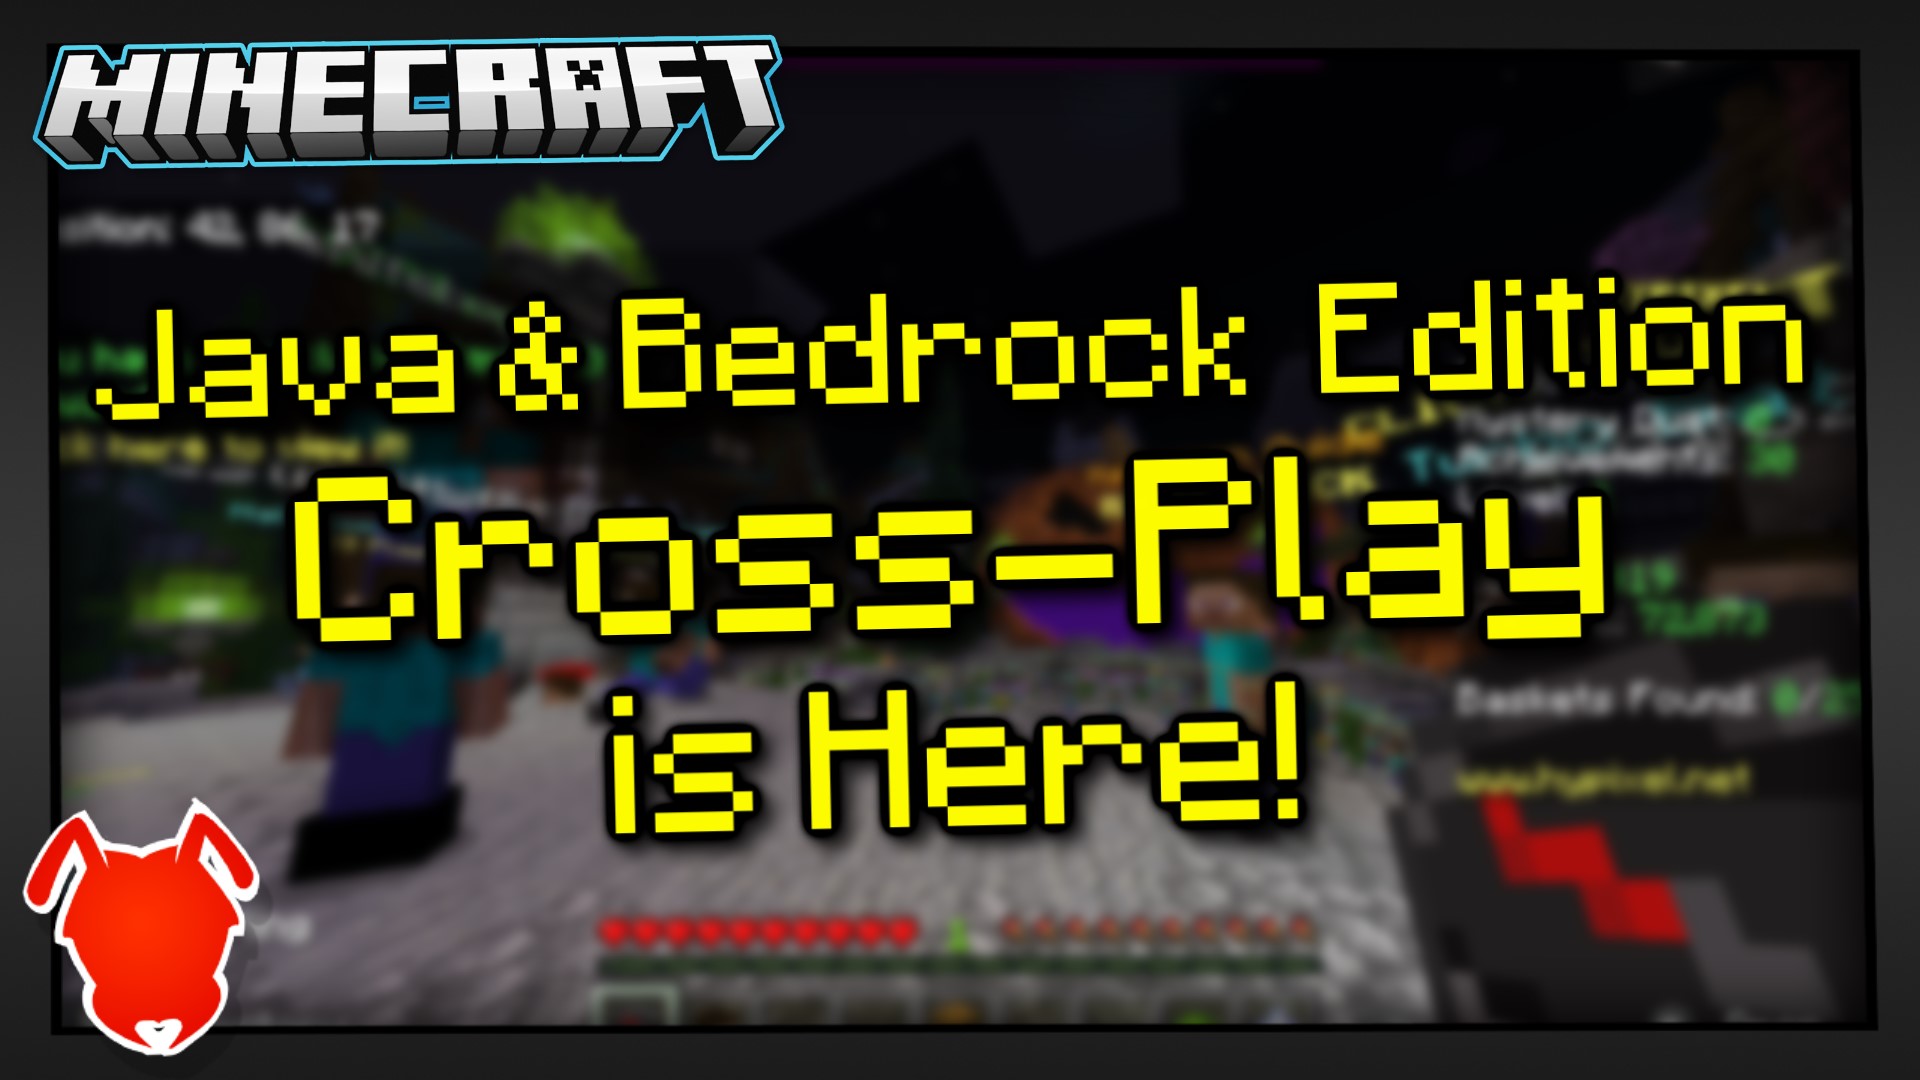 Is Minecraft Bedrock Edition Crossplay or Cross Platform? [2023